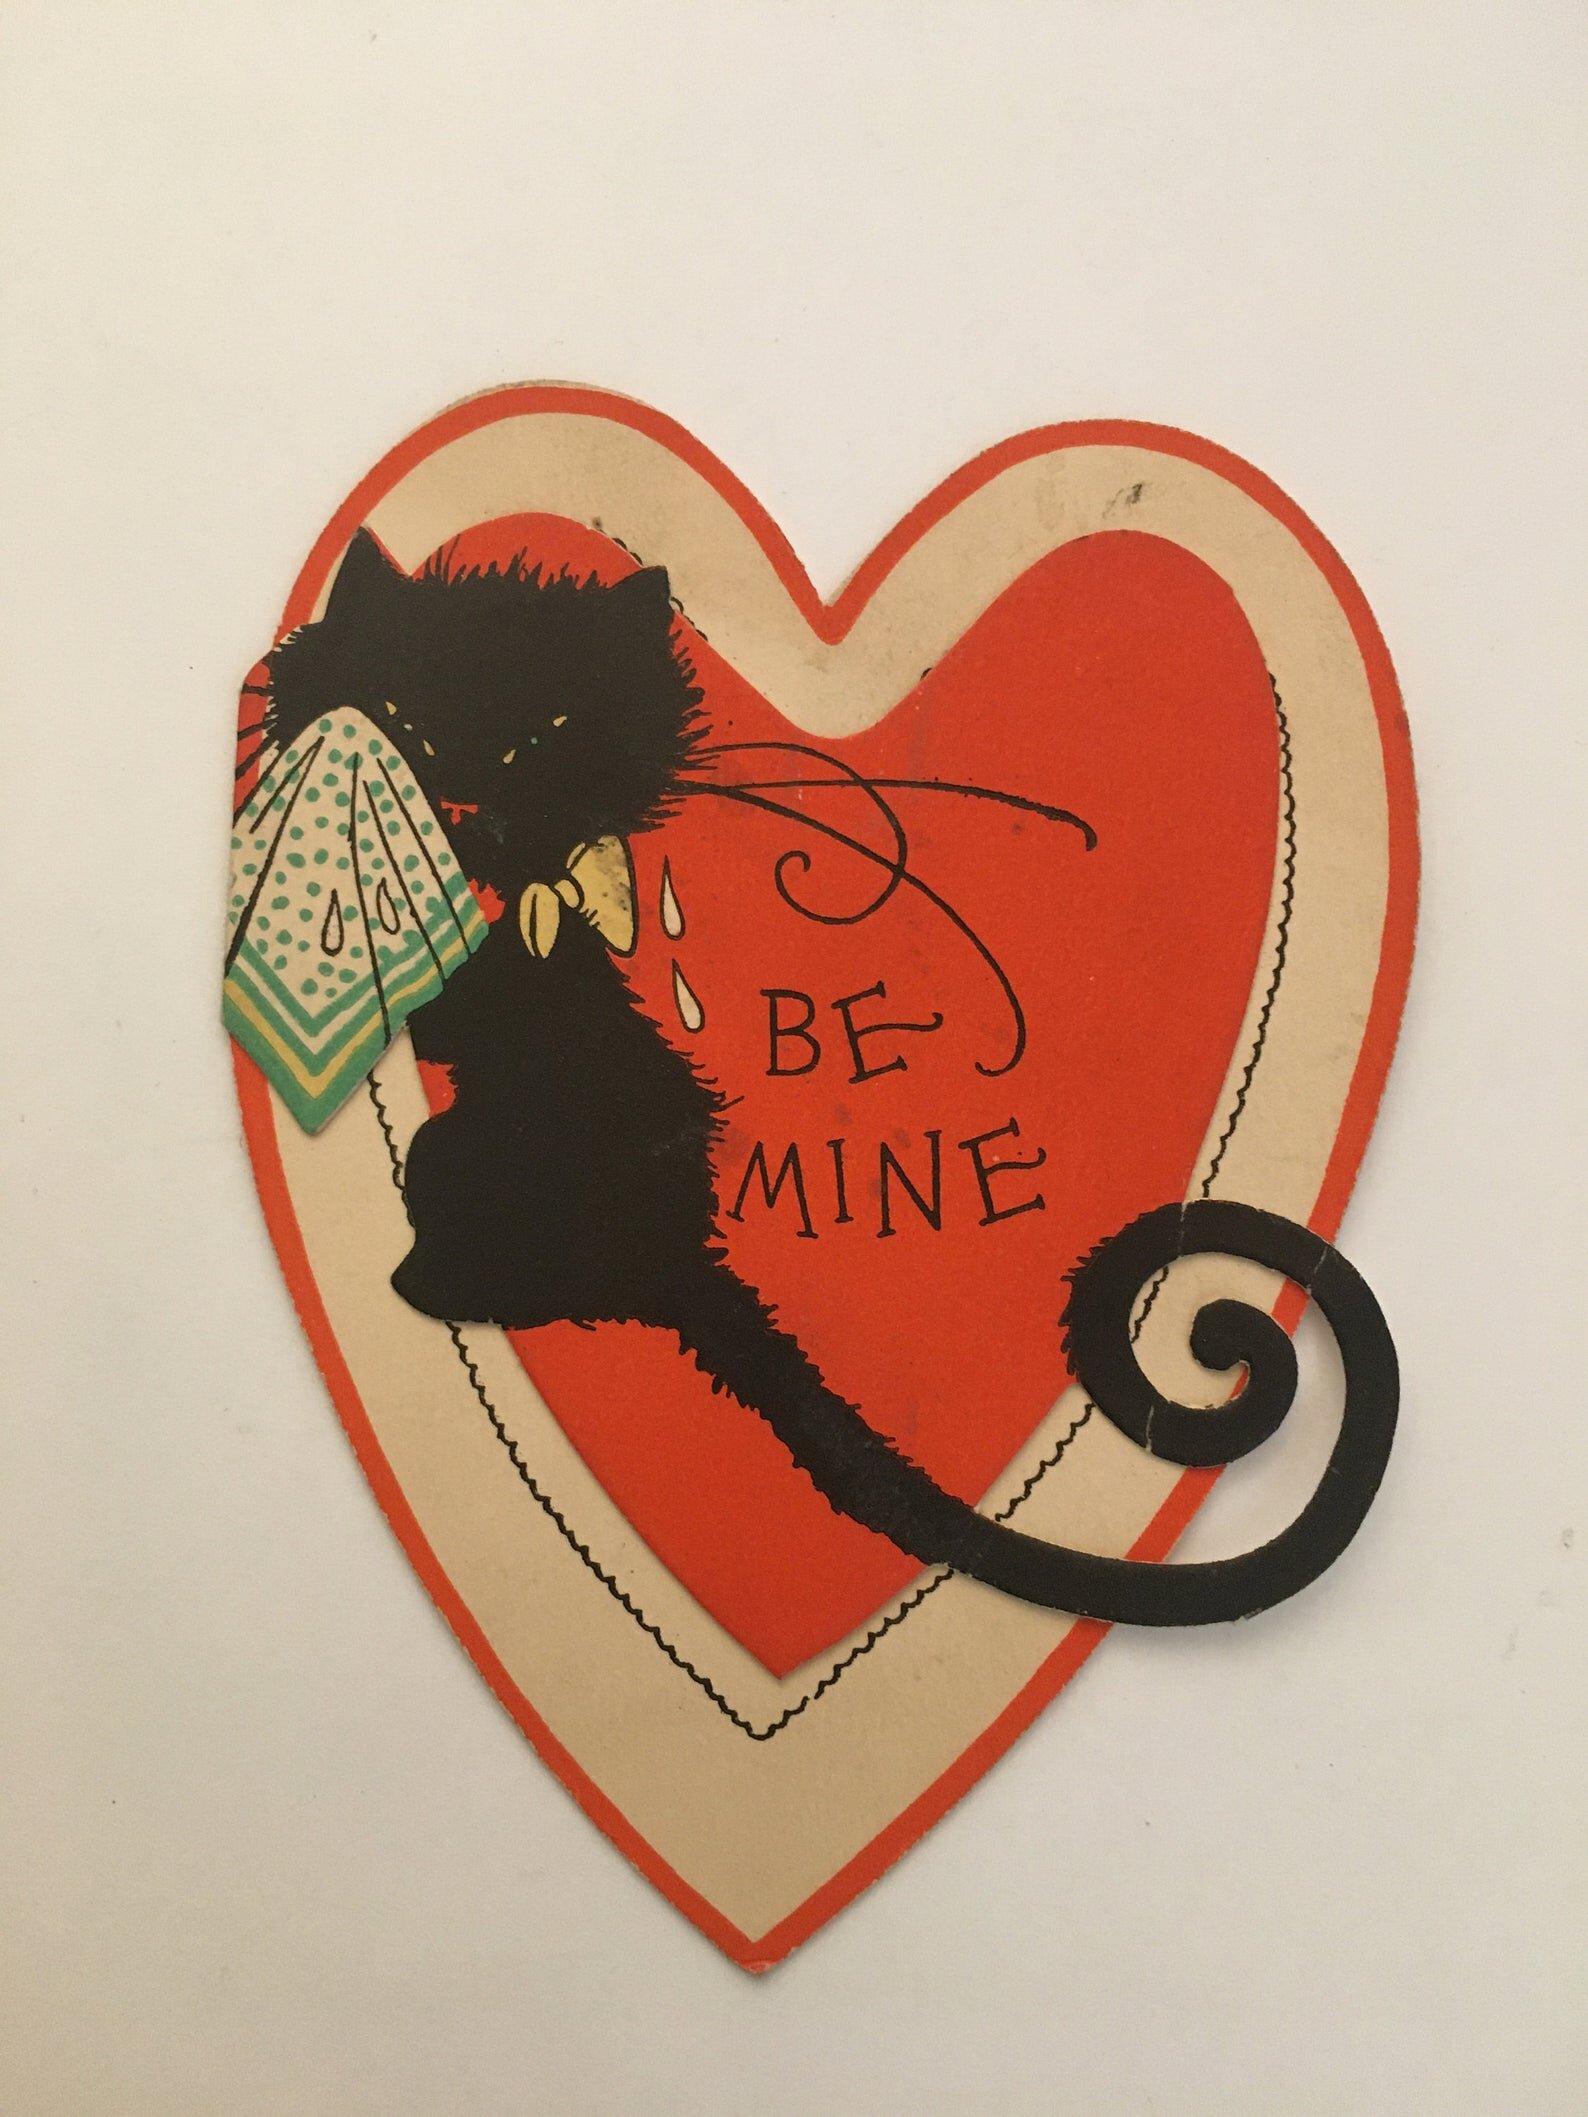 11 Gorgeous Vintage Valentine's Day Cards